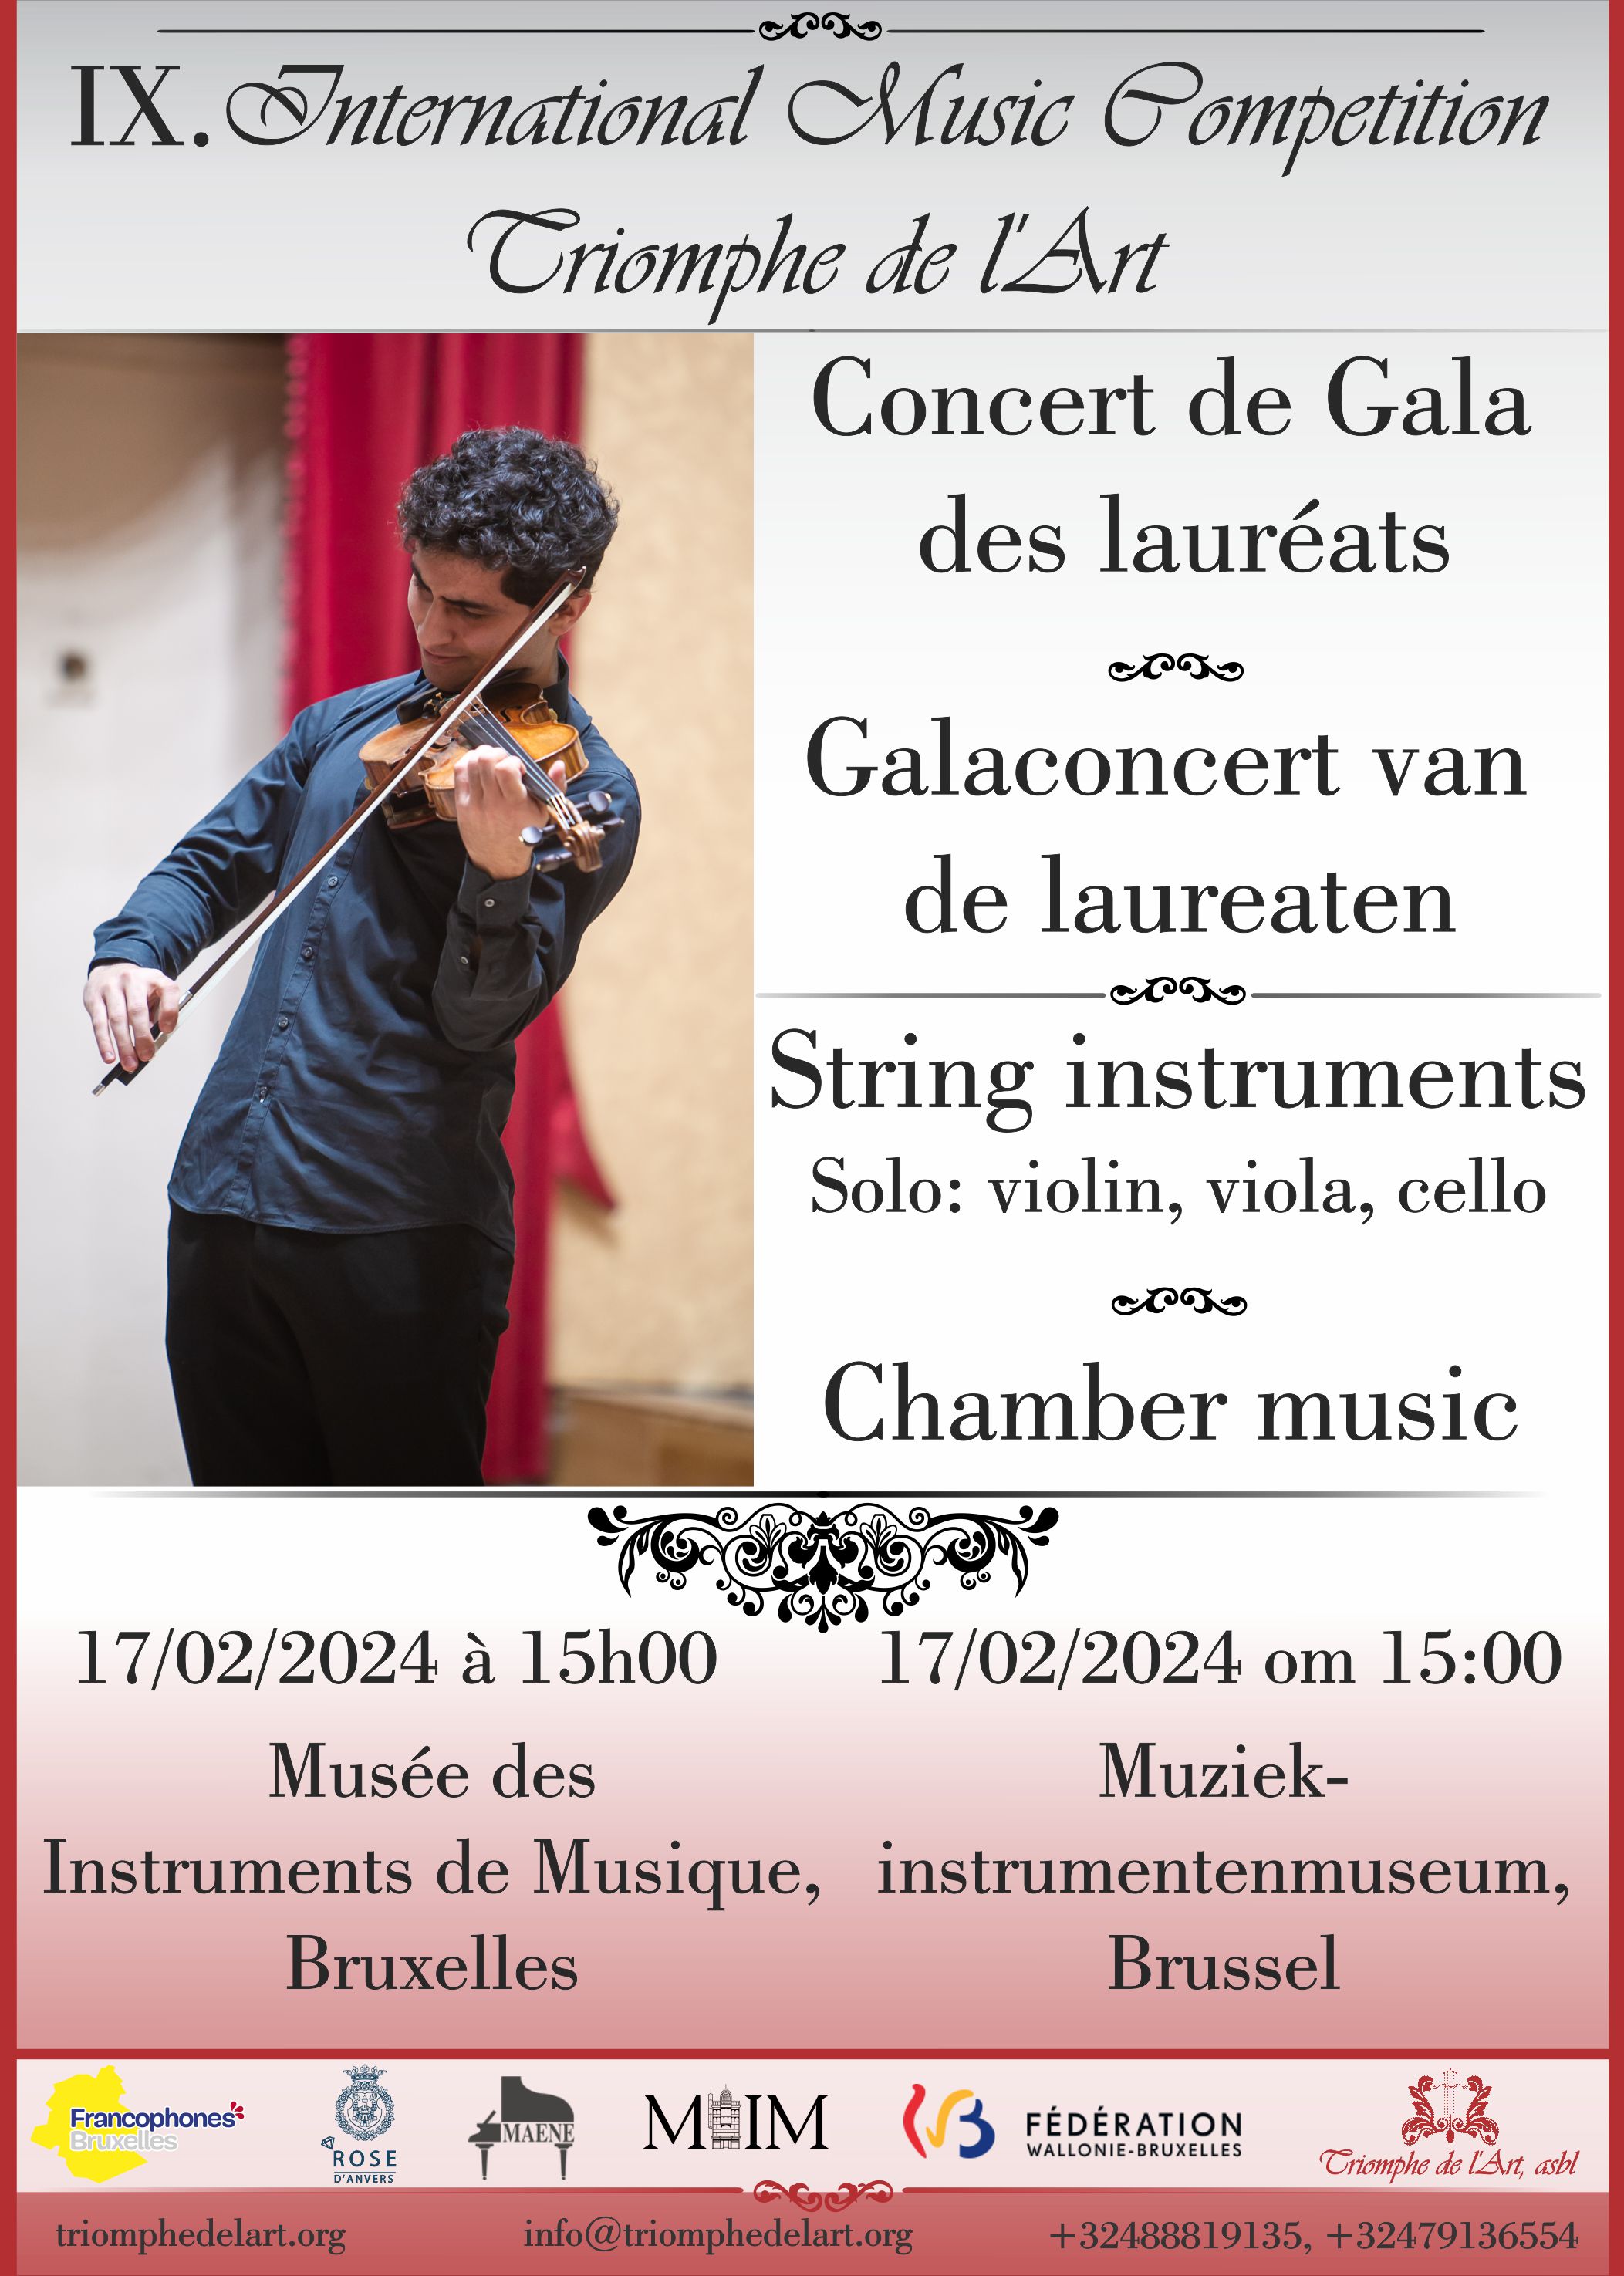 String instruments & Chamber music